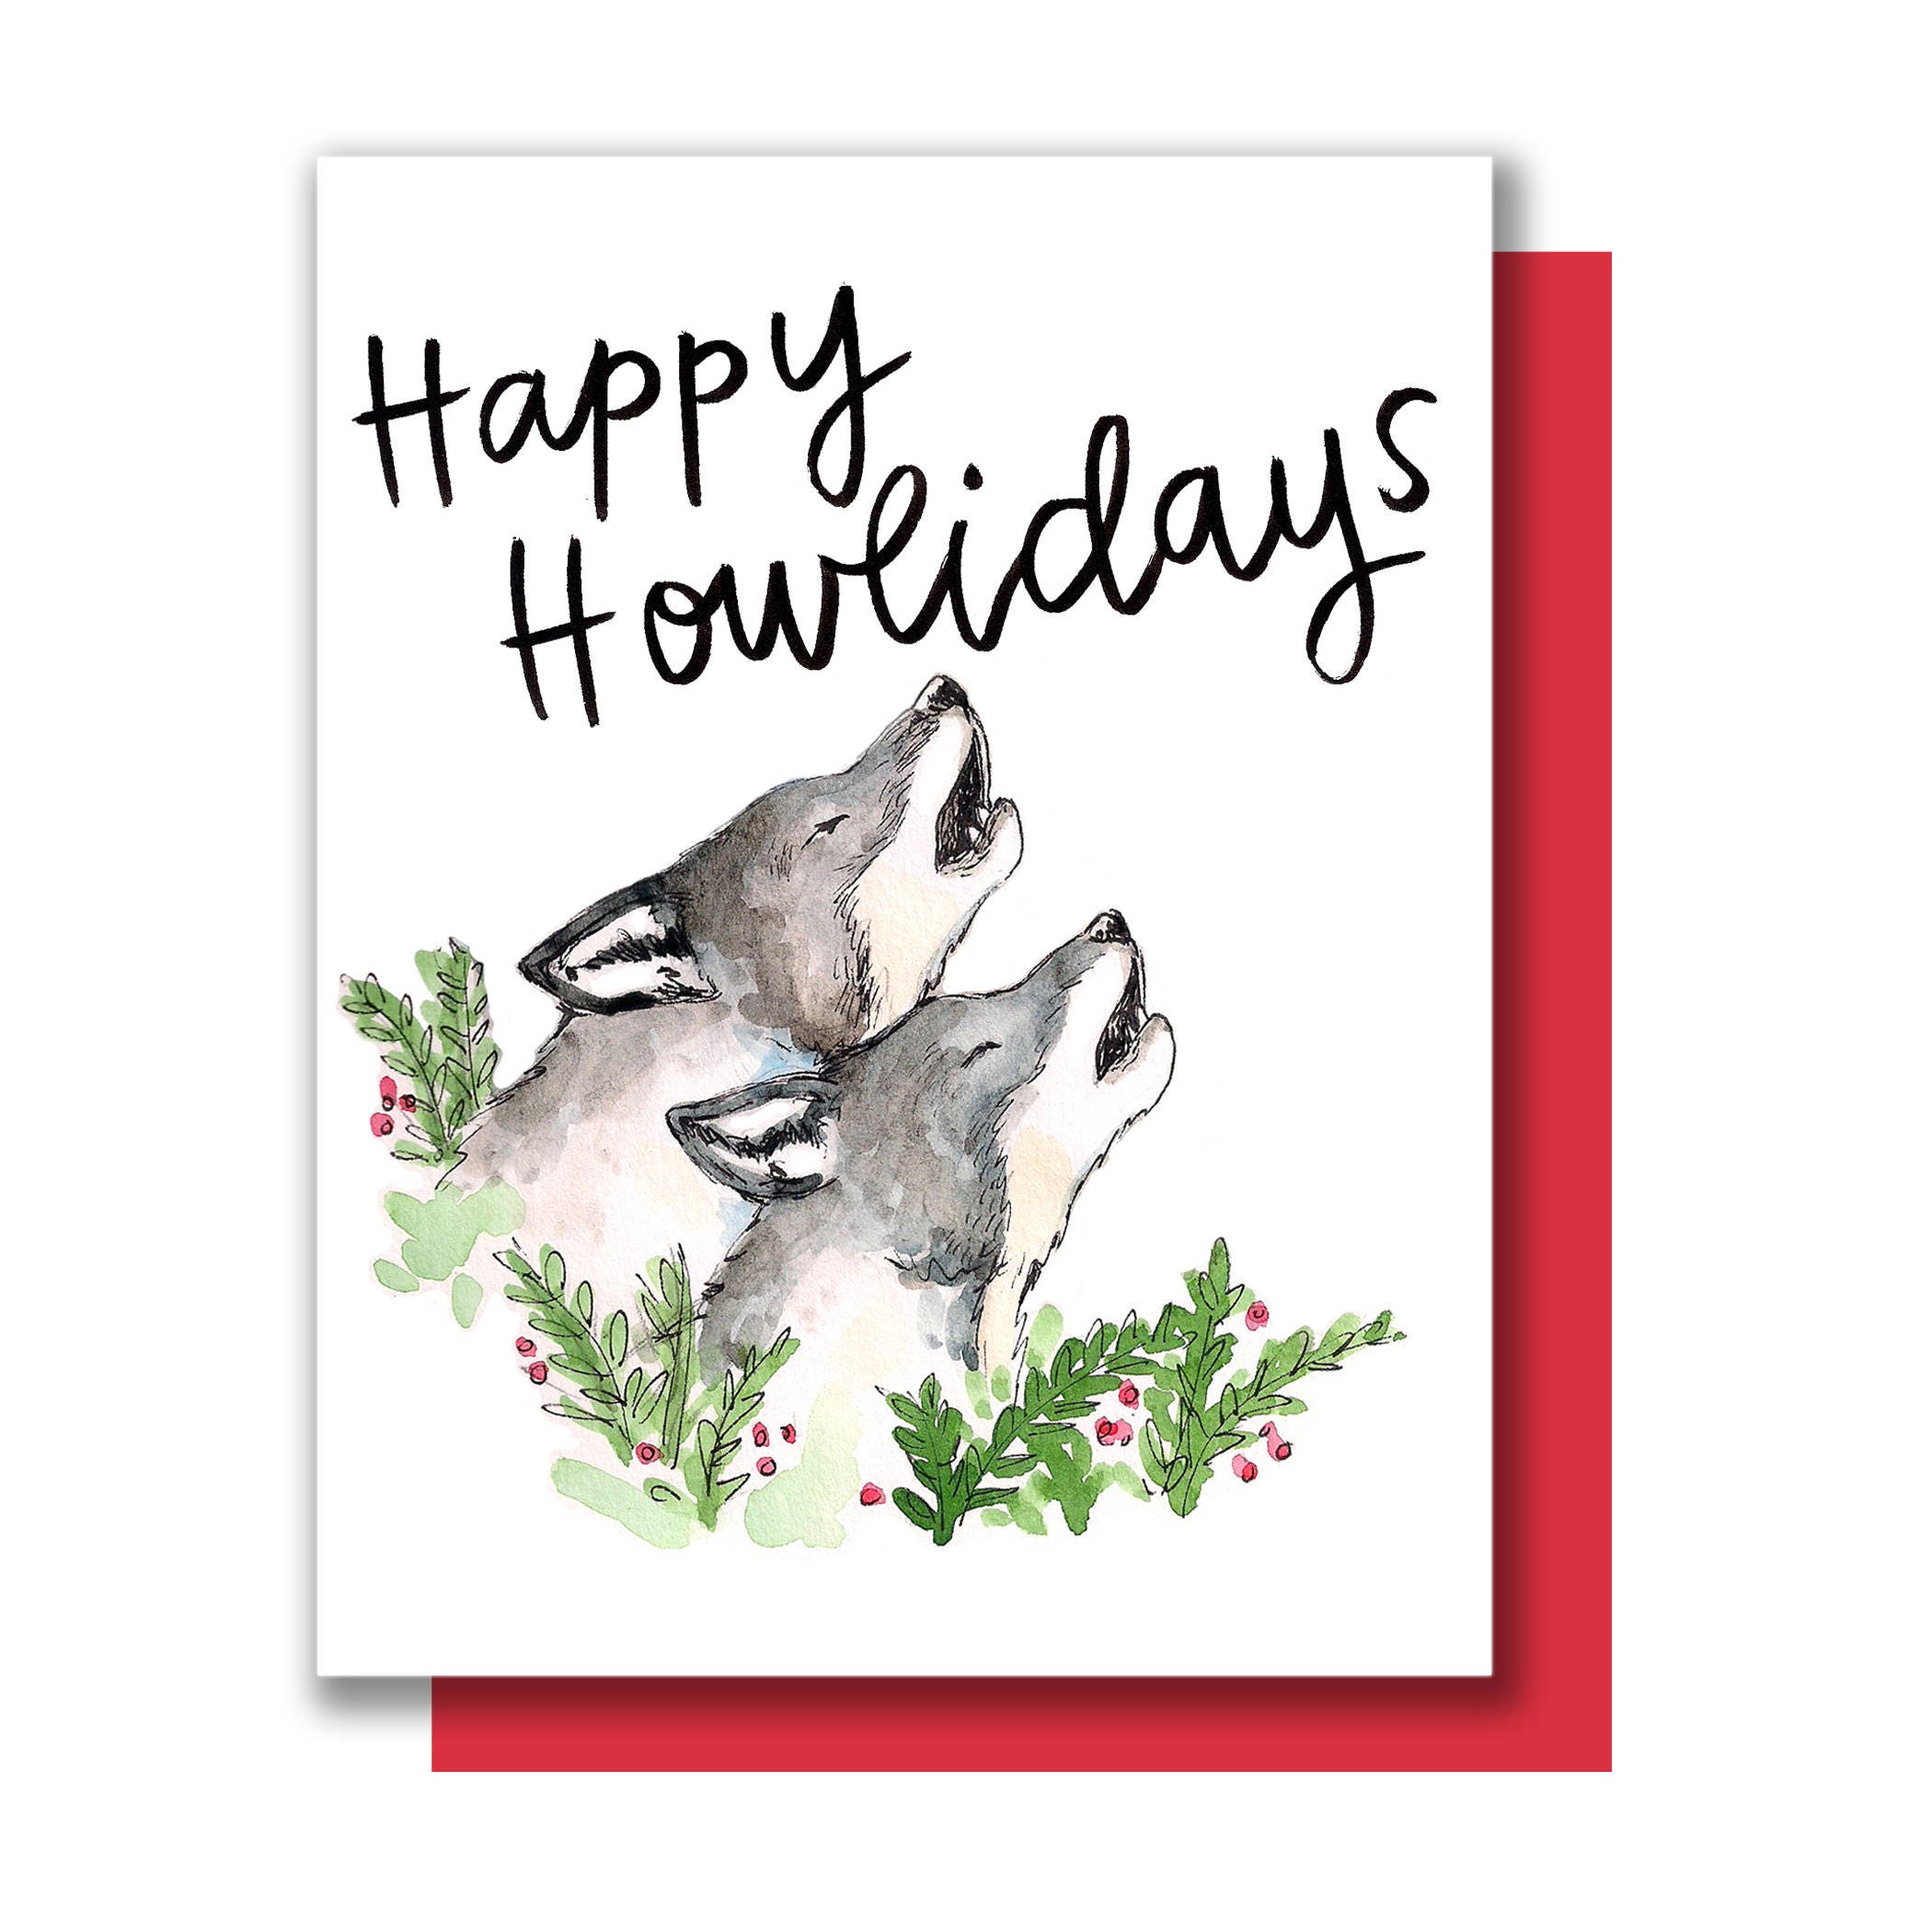 Happy Holidays Hoopus - Canis Hoopus